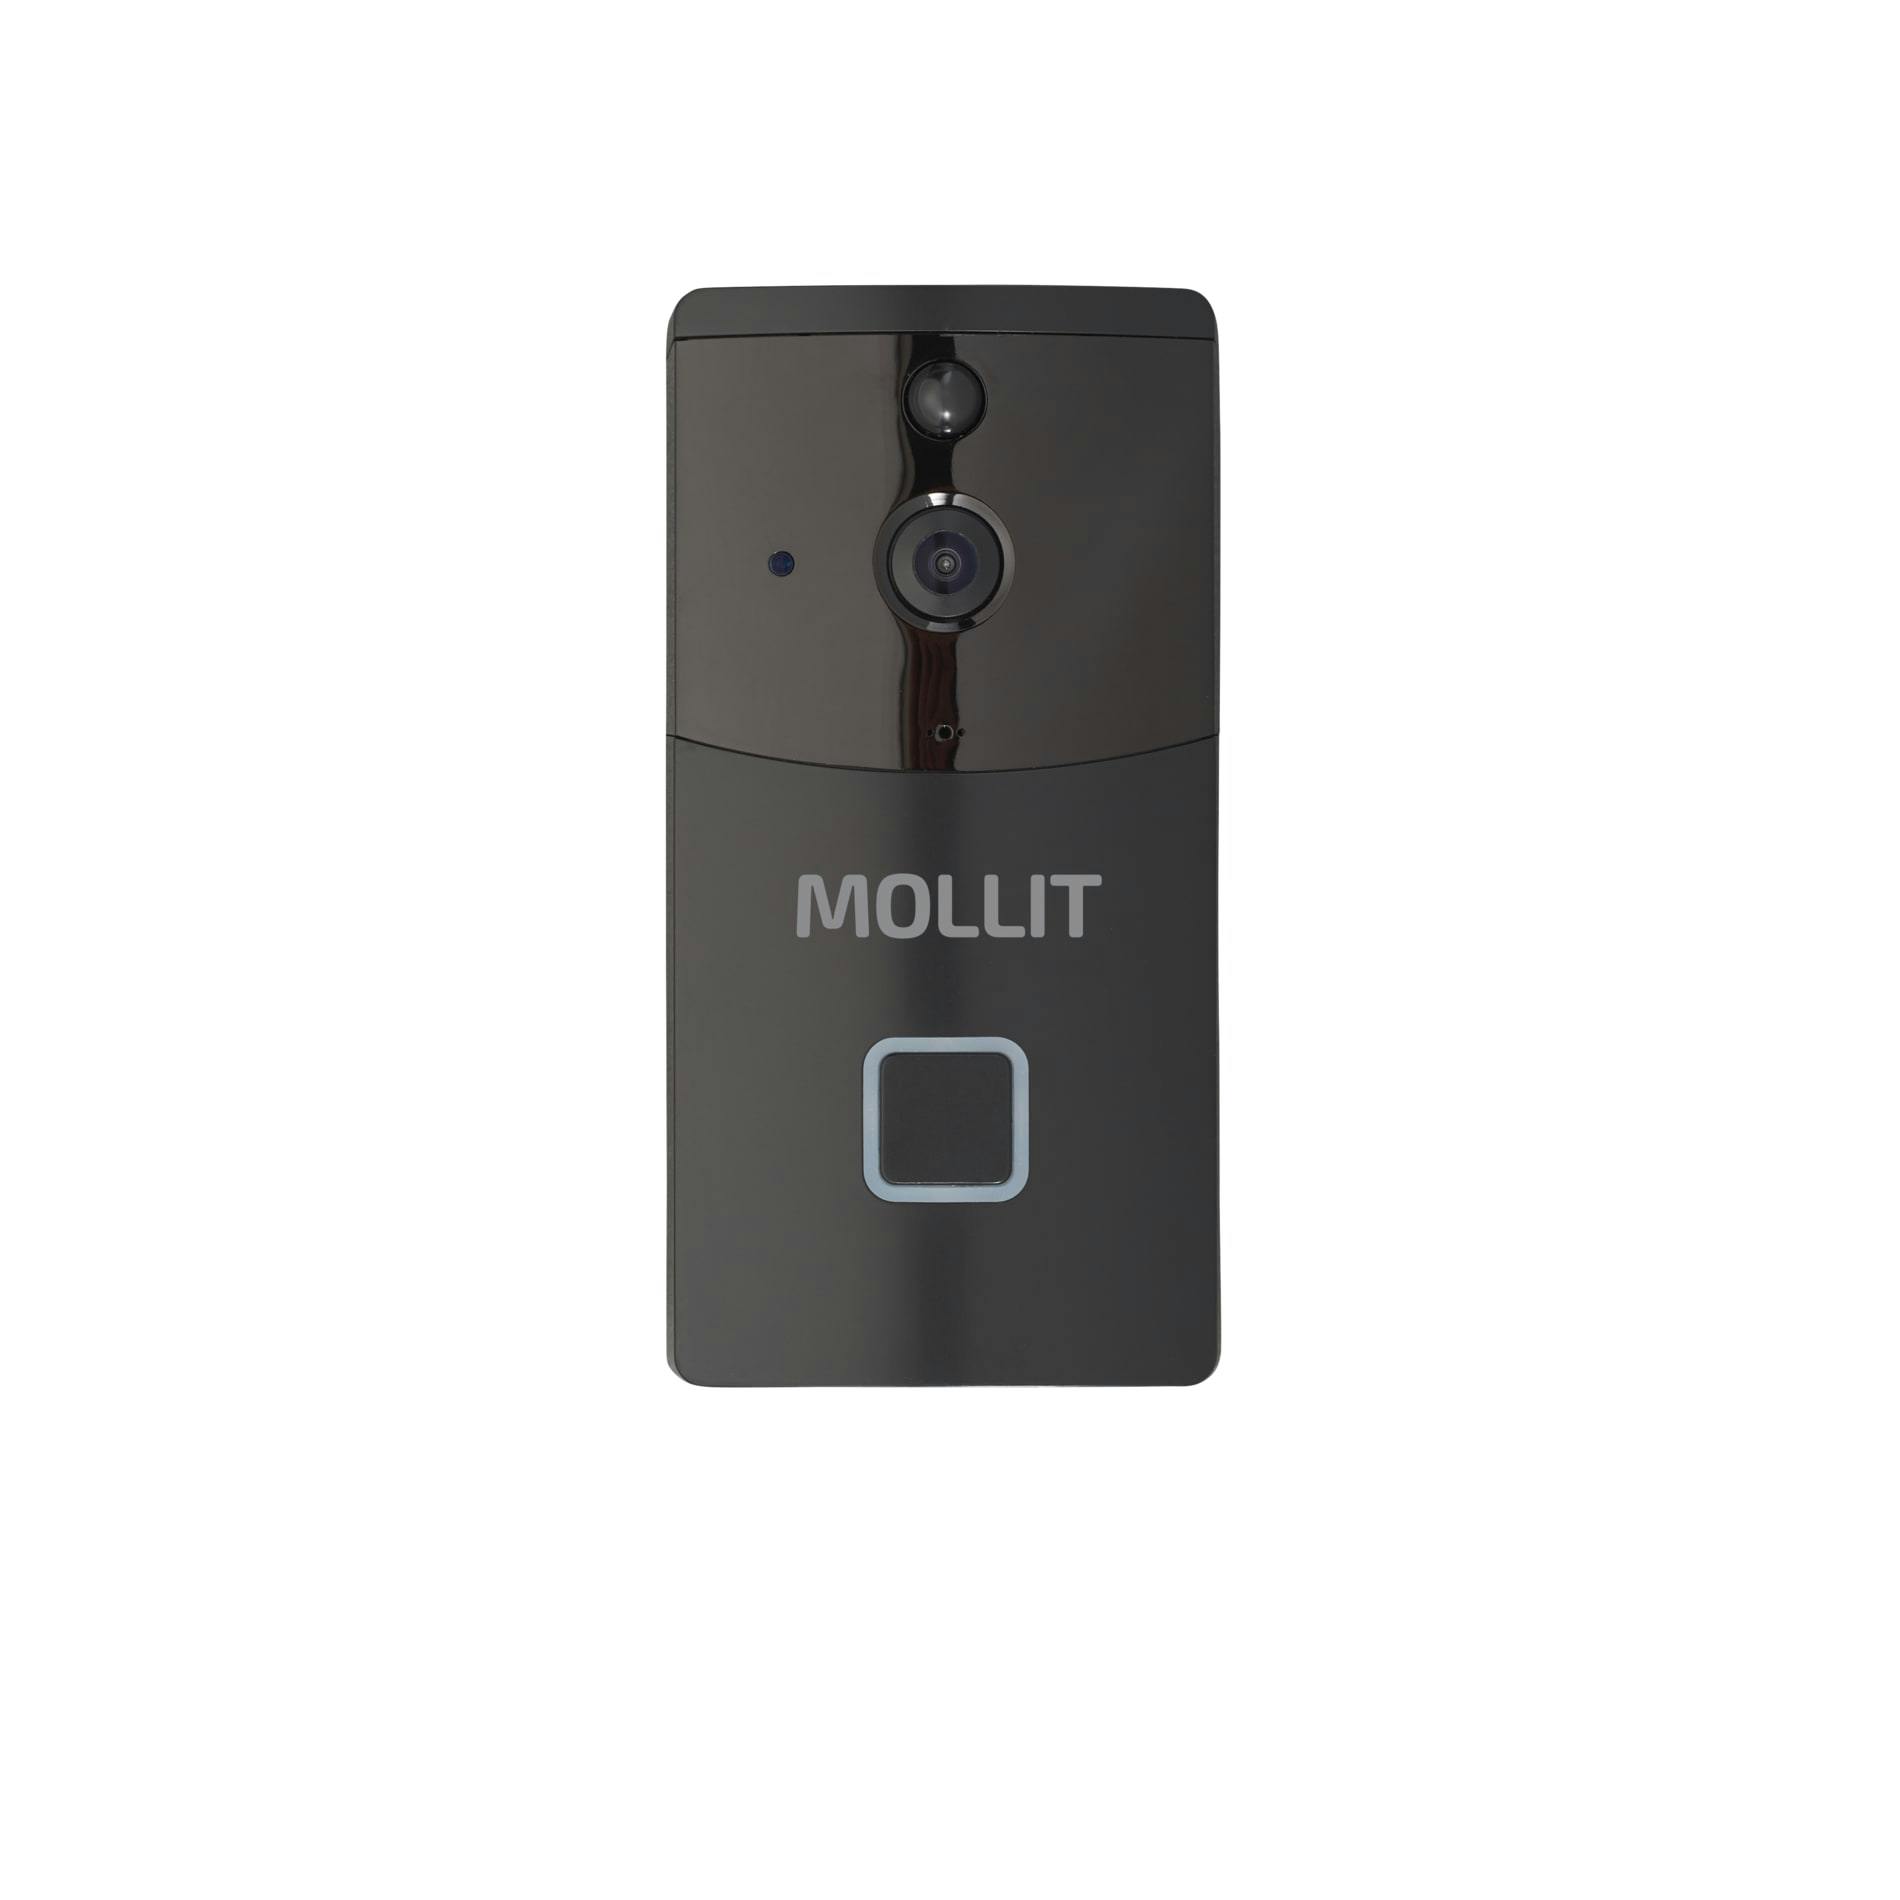 Smart Wifi Video Doorbell - additional Image 3